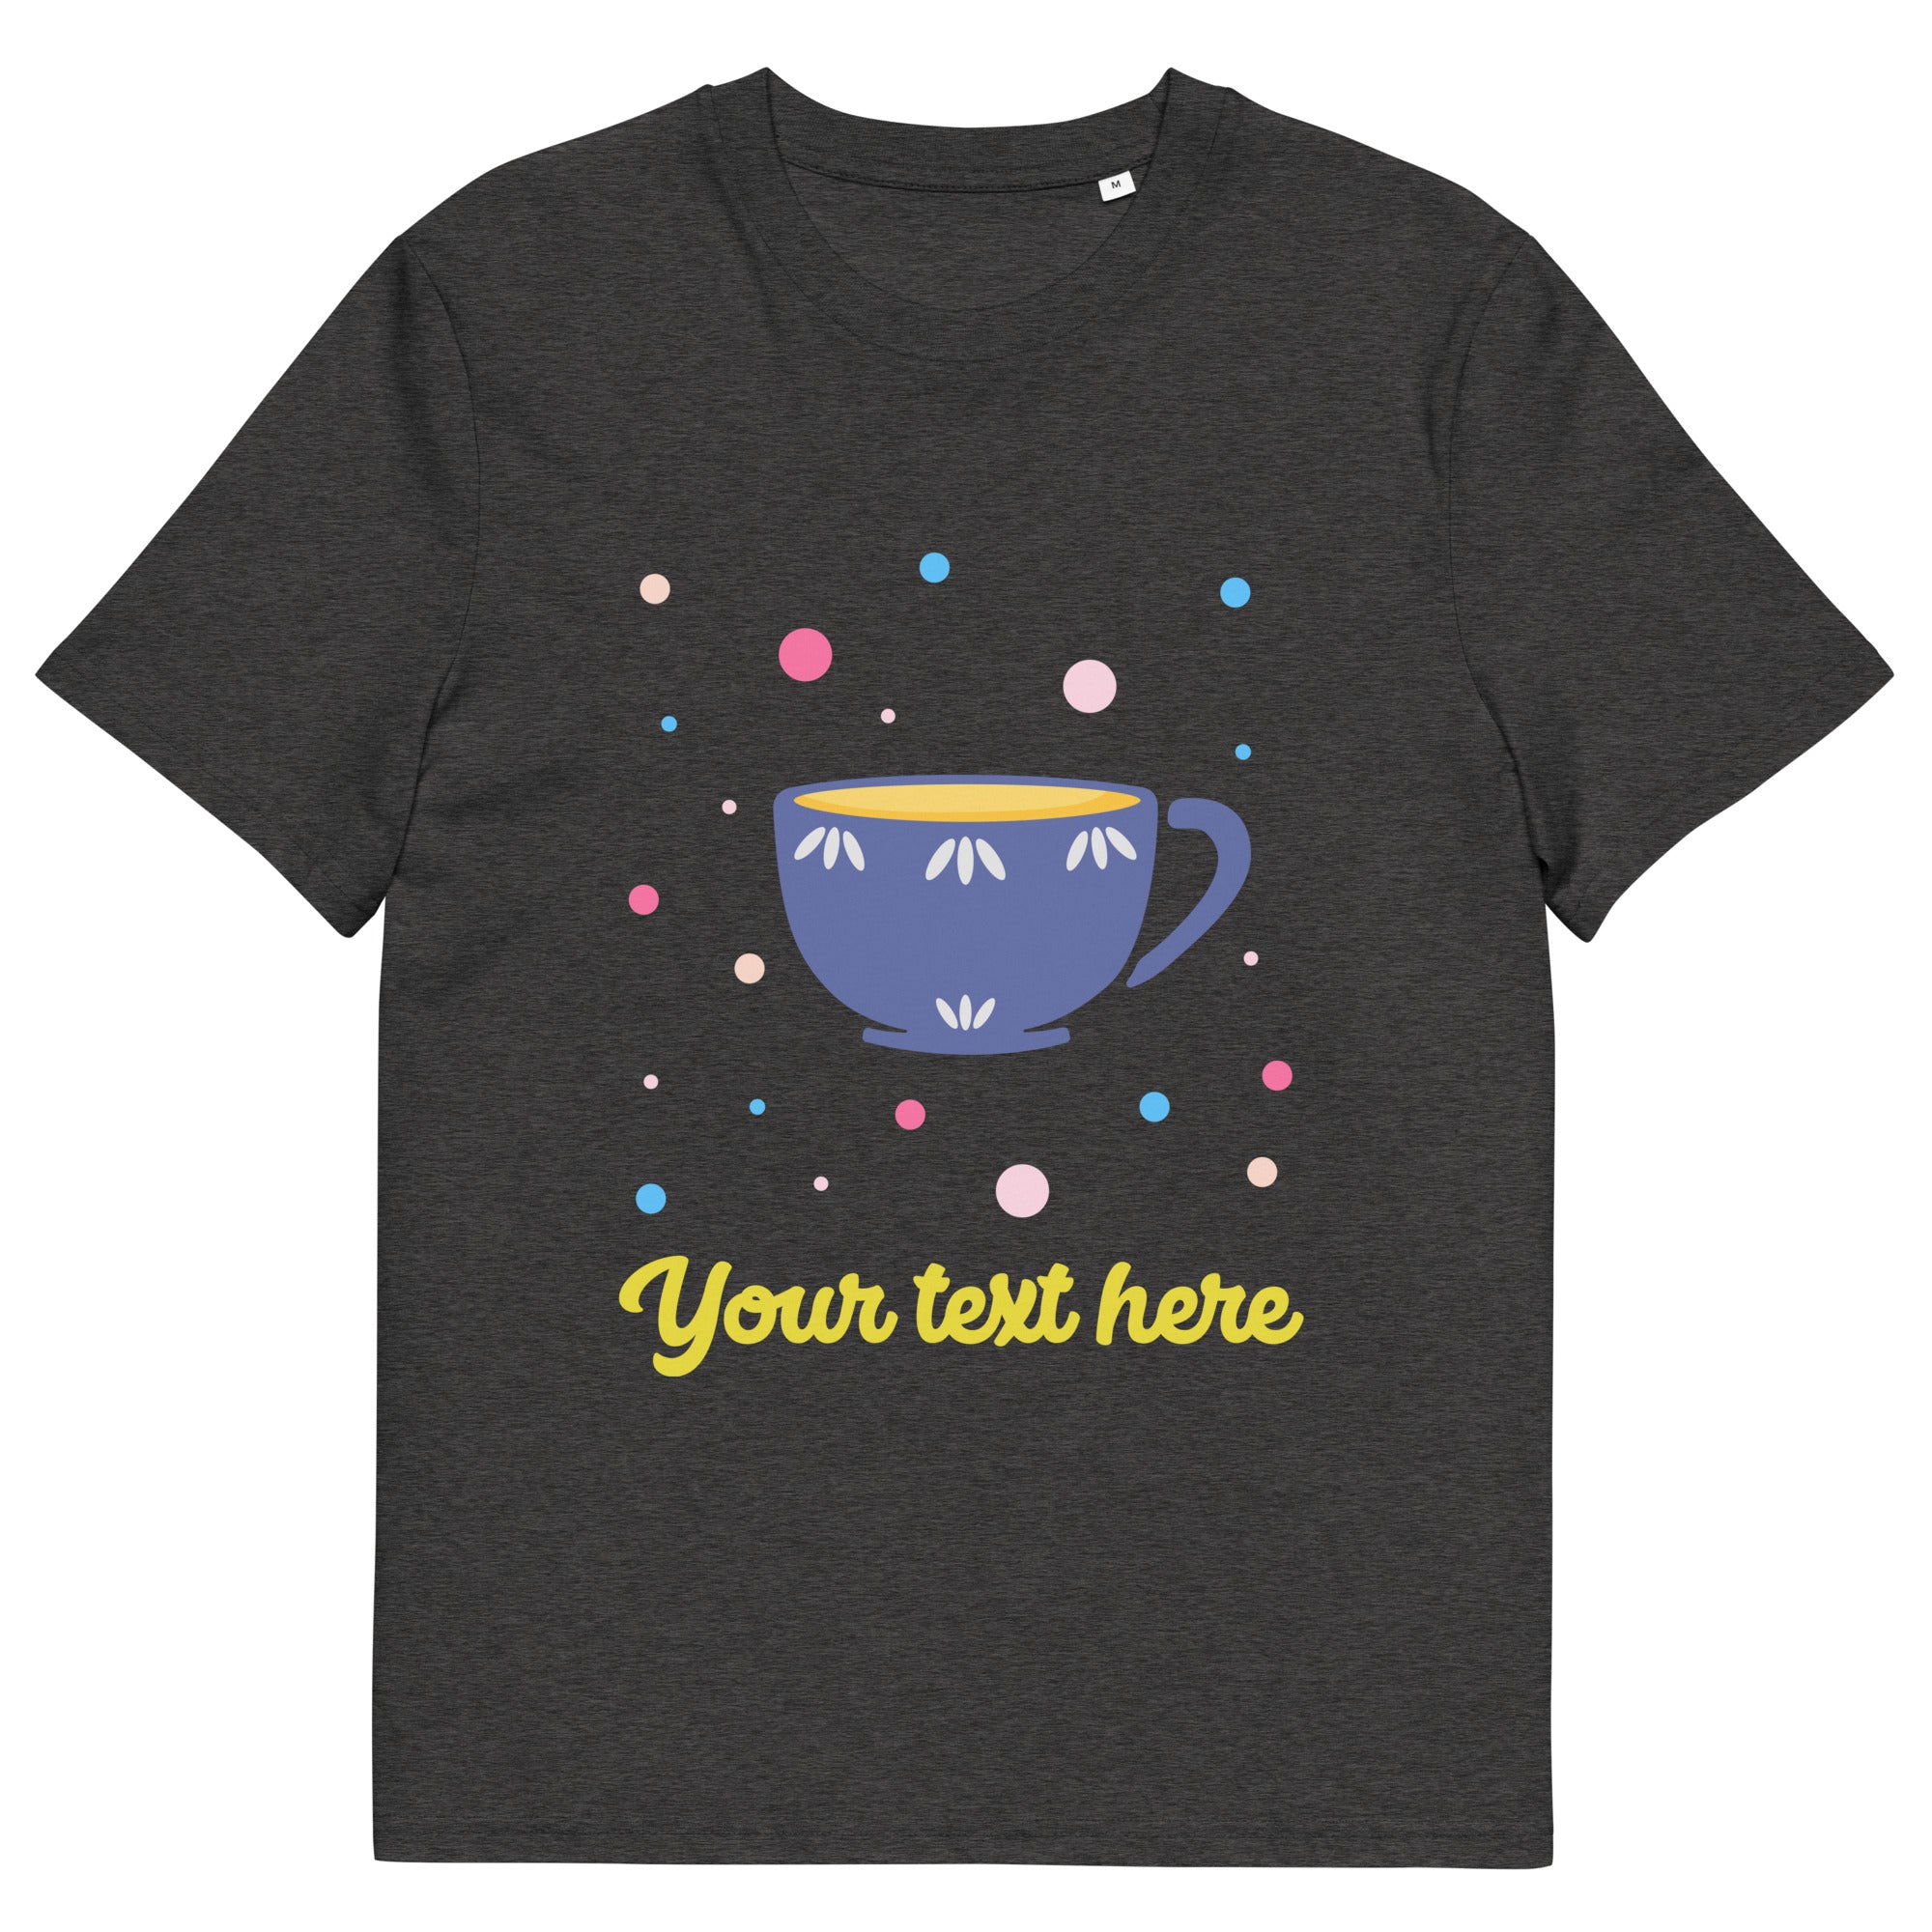 Personalised Custom Text - Organic Cotton Adults Unisex T-Shirt - London Doodles - Cup Of Tea - Dark Grey